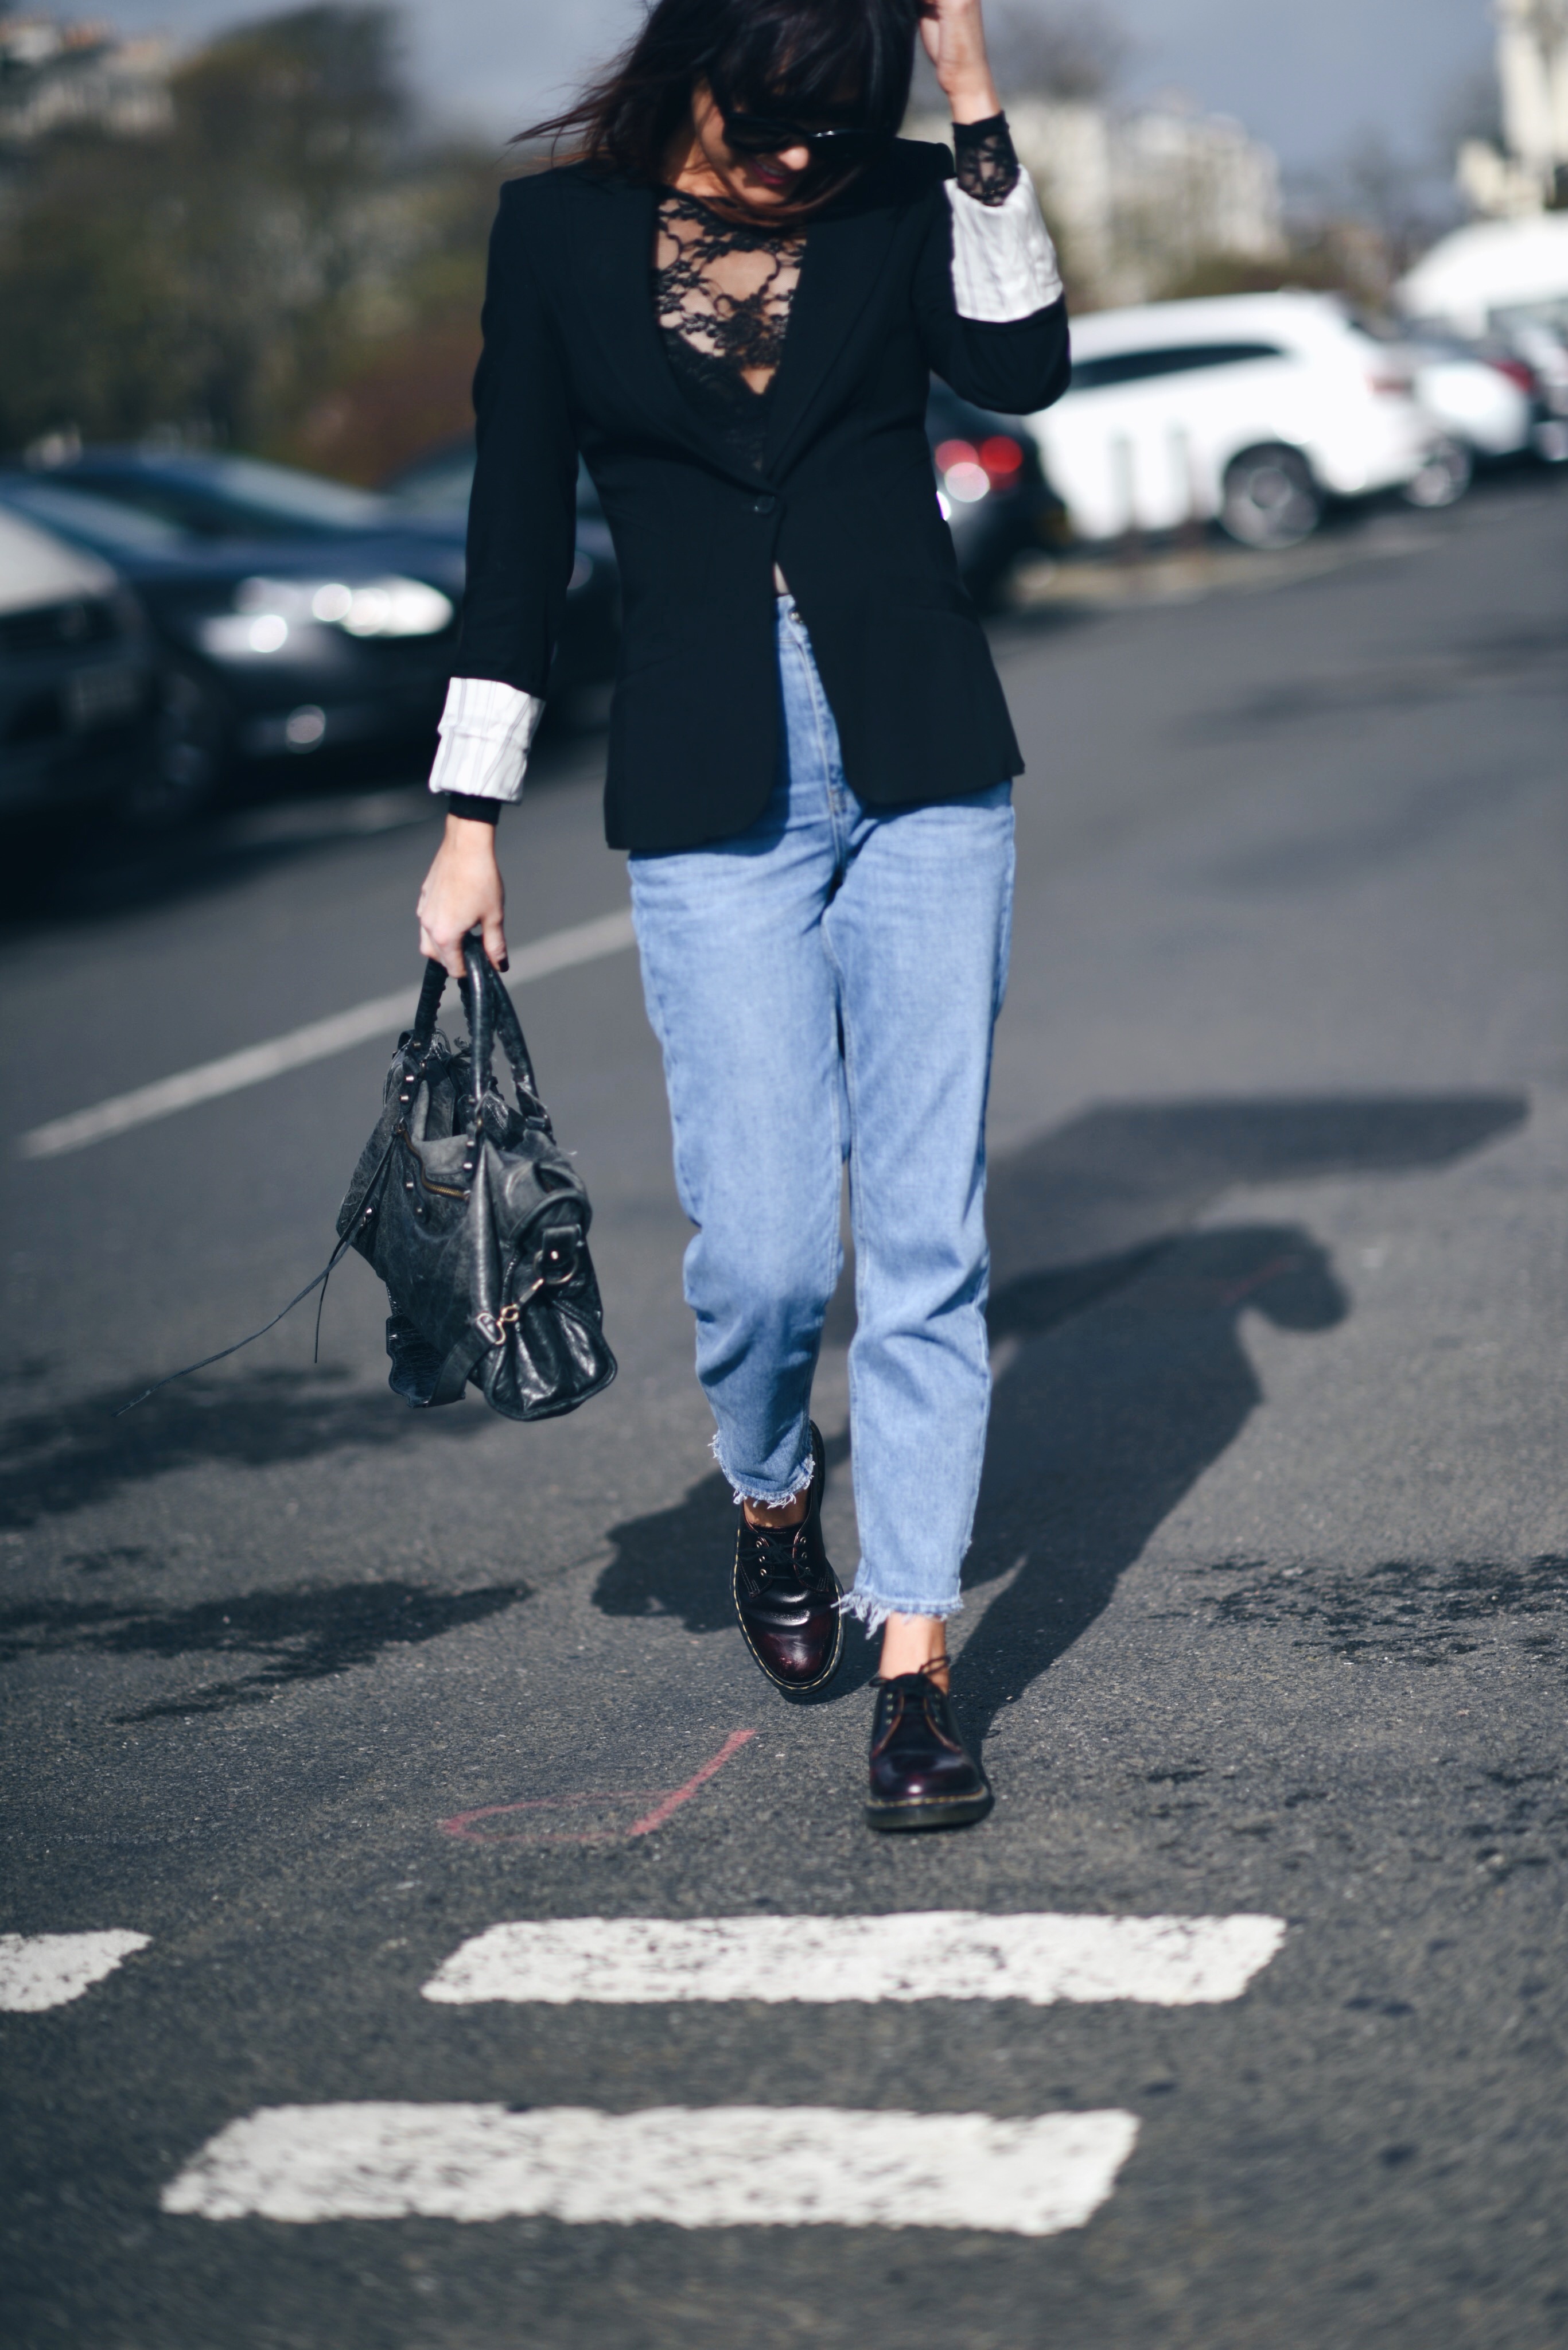 black-jacket-blue-jeans-how-to-style-a-blazer